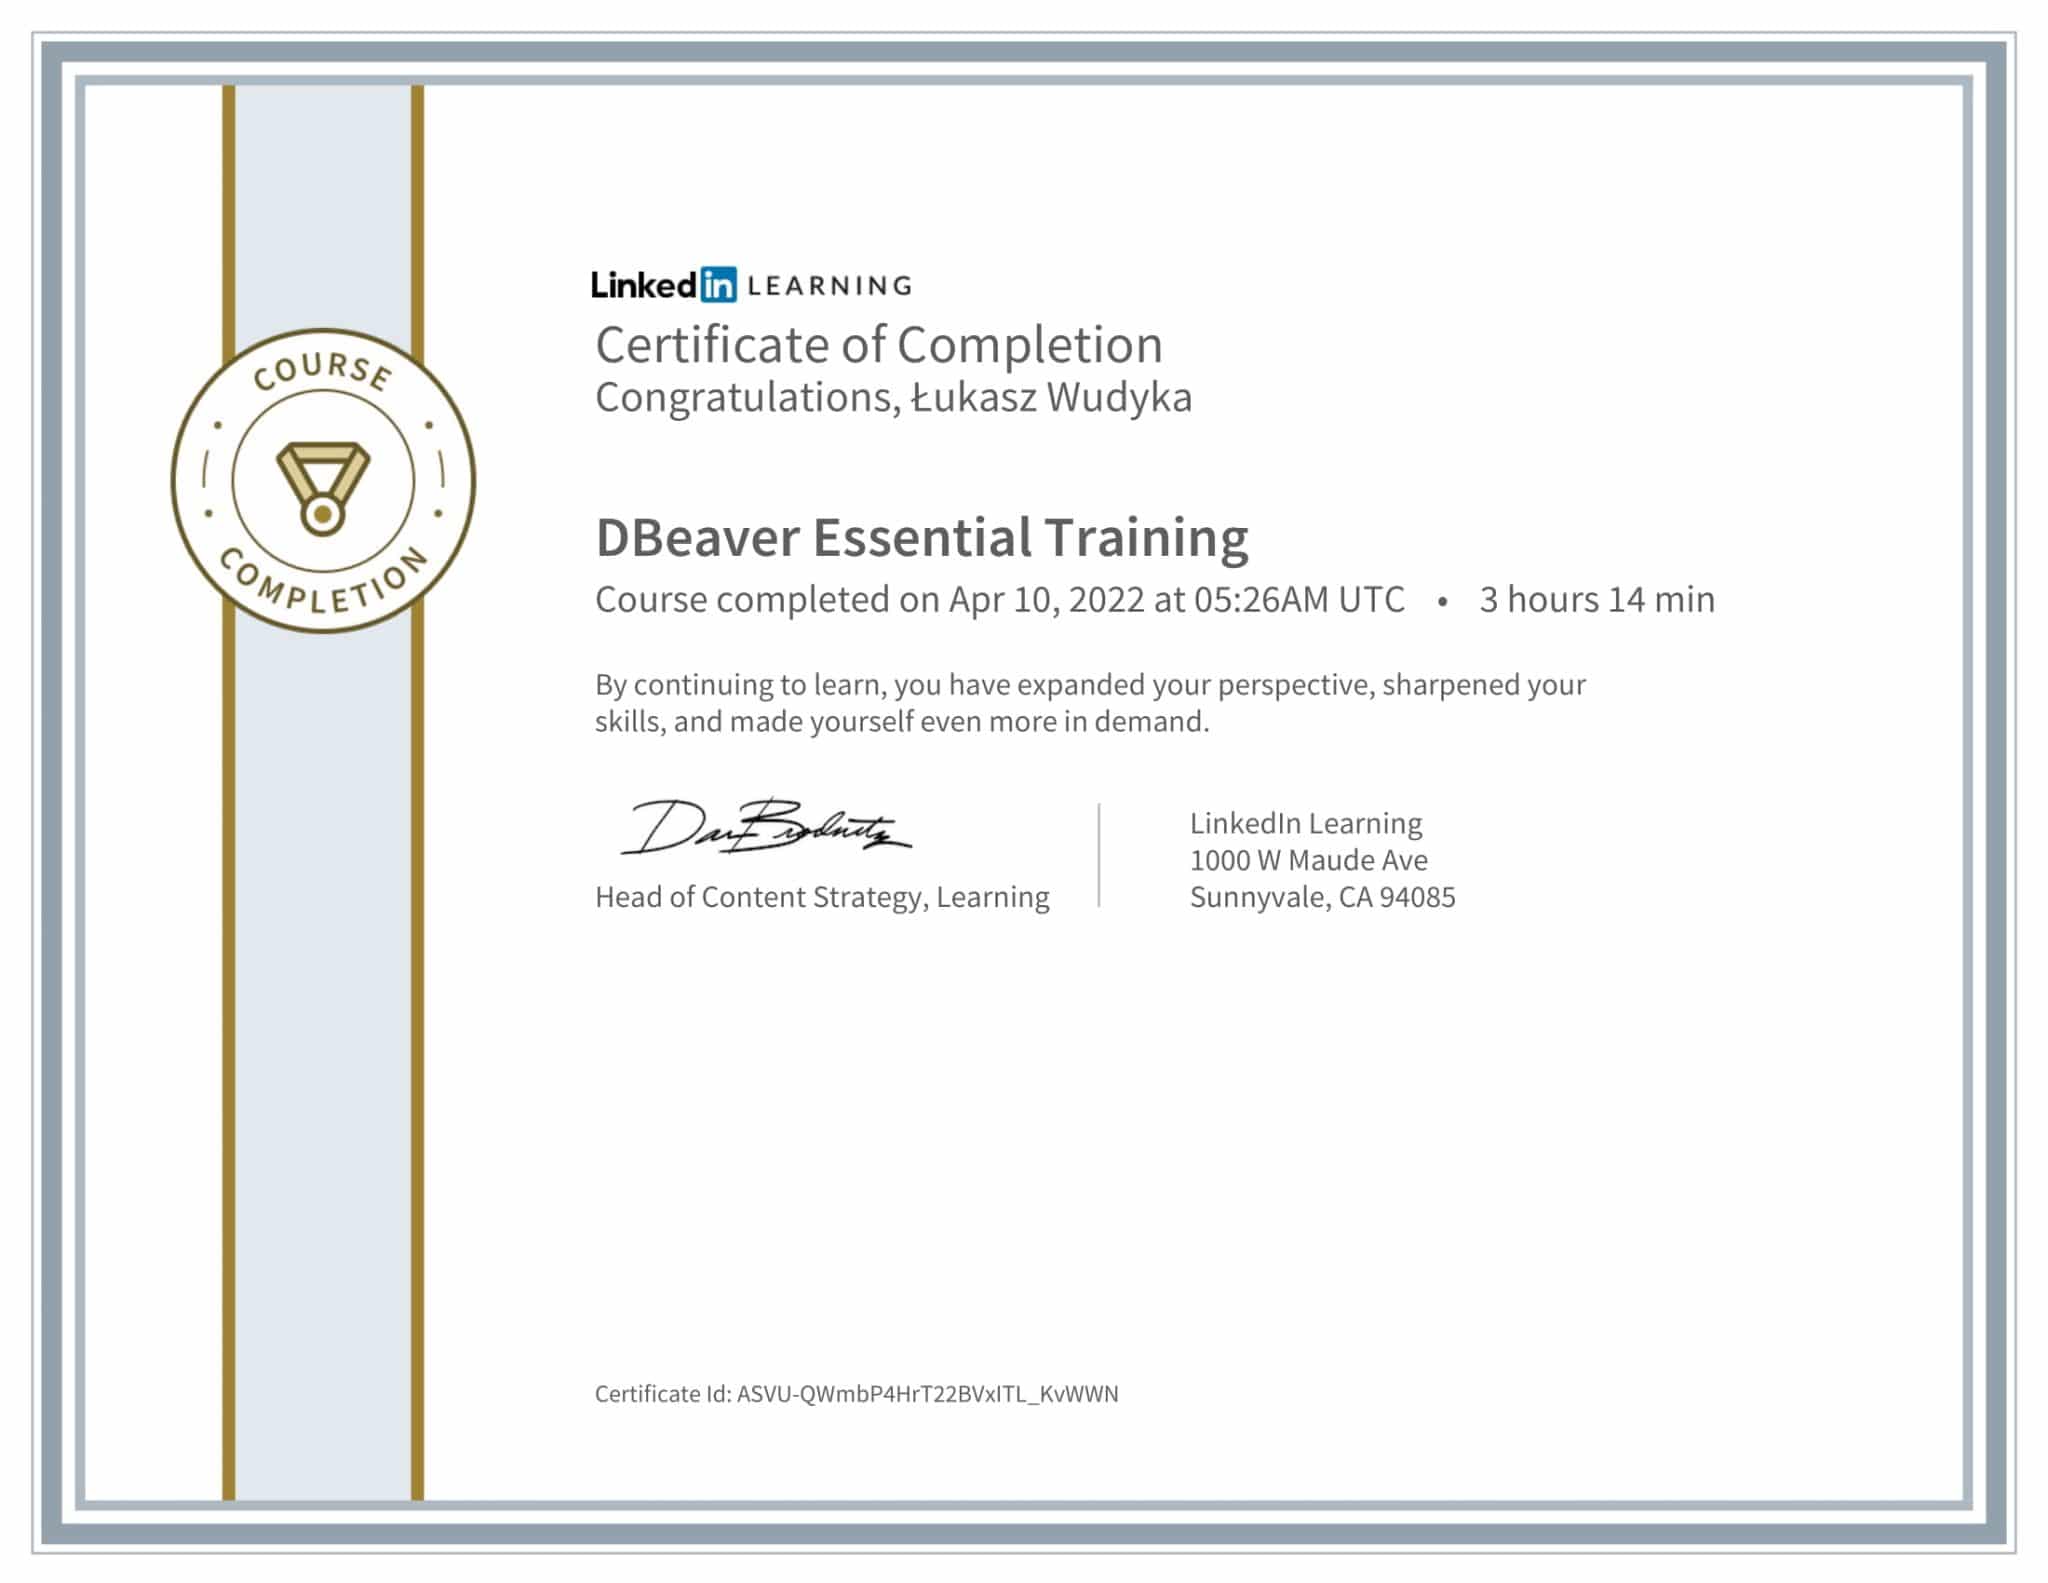 CertificateOfCompletion_DBeaver Essential Training-1